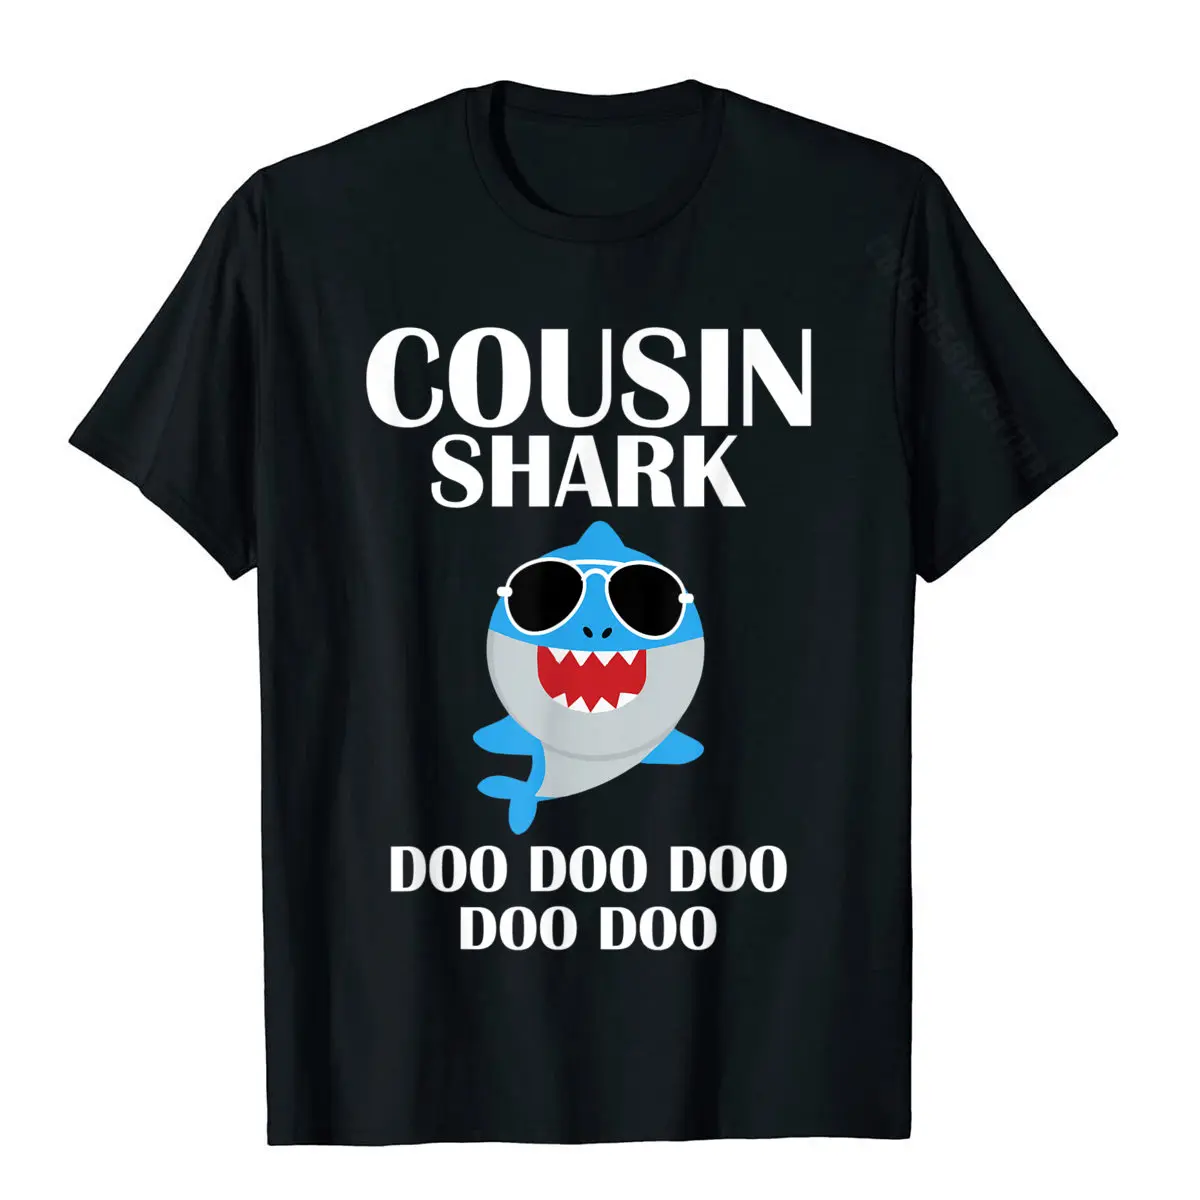 Cousin Shark T-Shirt Doo Doo Doo Funny Cousin Christmas T-Shirt Dominant Normal Tshirts Cotton Men's T Shirt Design